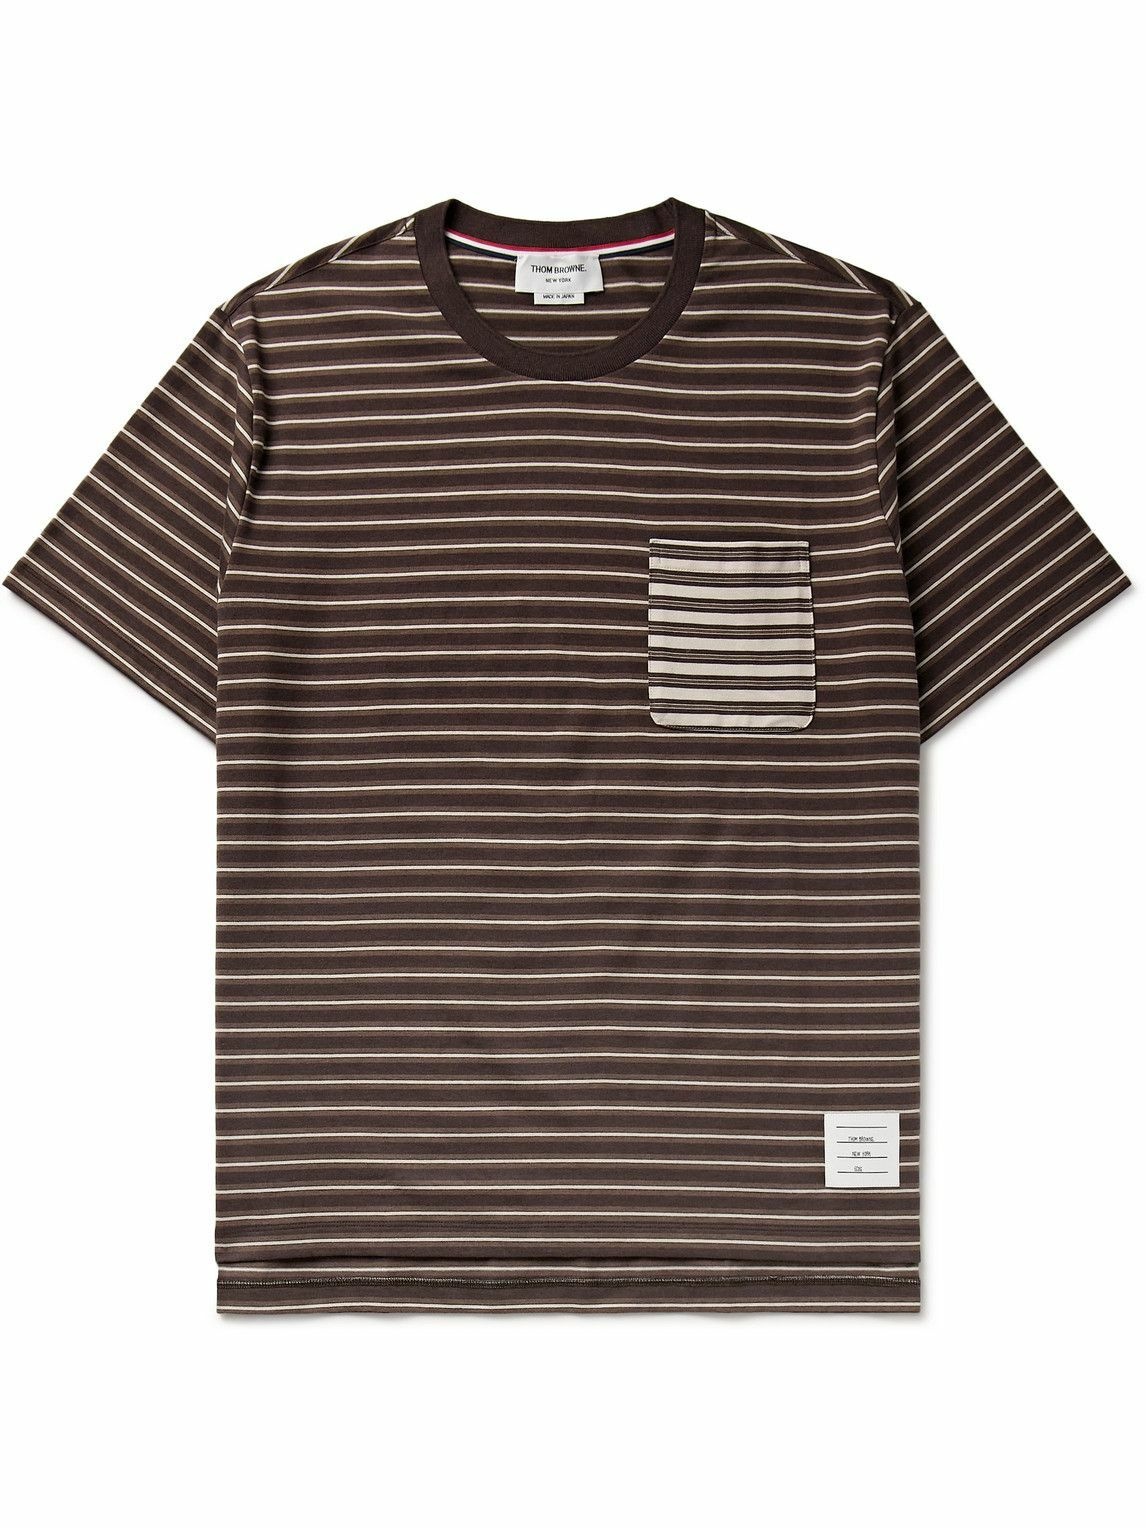 Thom Browne - Logo-Appliquéd Striped Cotton-Jersey T-Shirt - Brown Thom ...